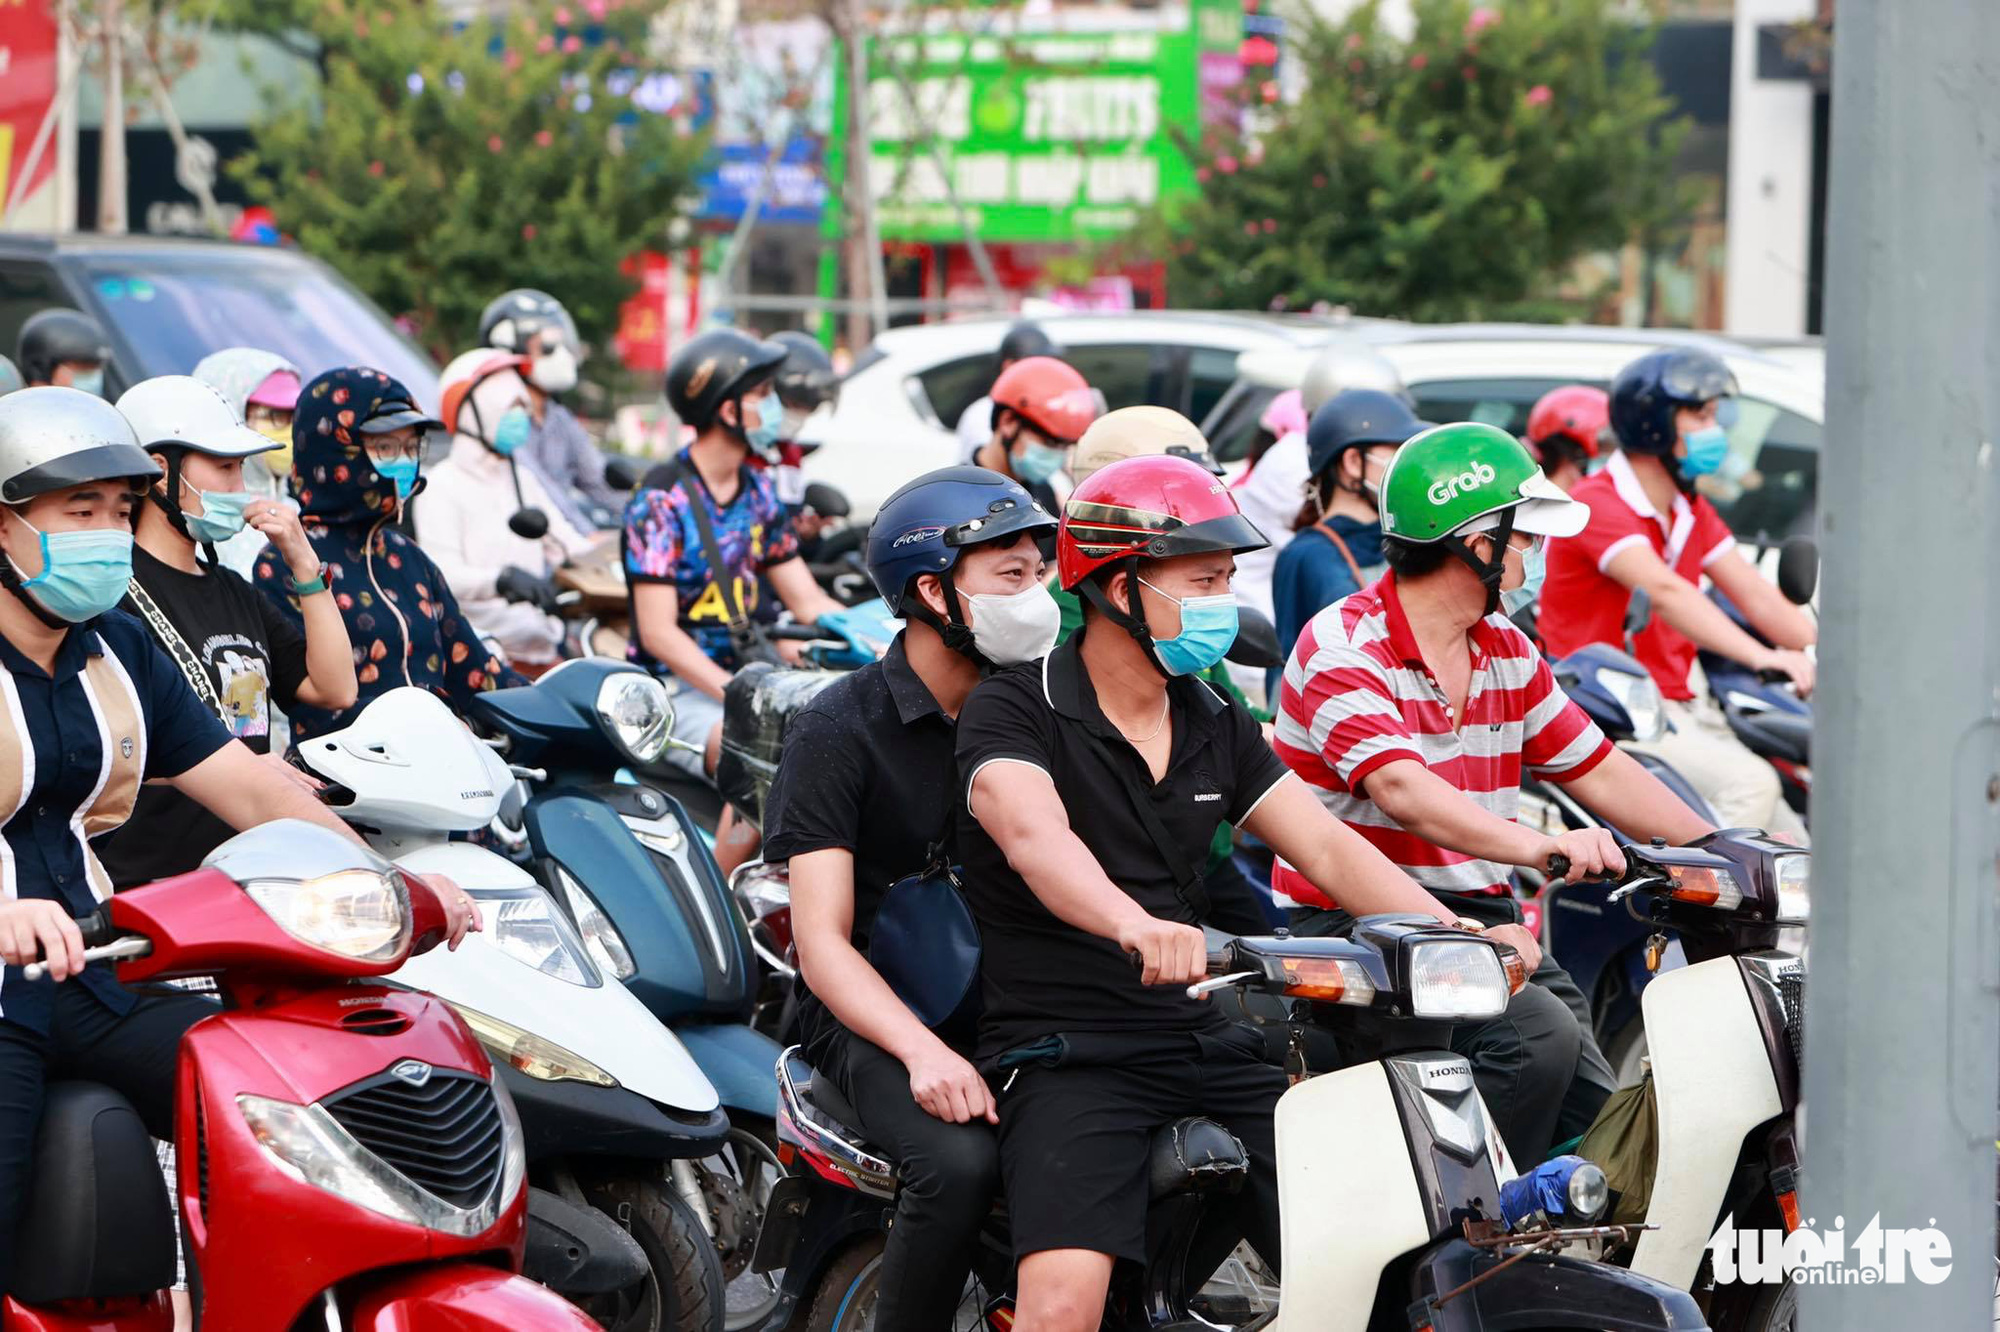 Vehicles crowd a street in Hanoi, September 21, 2021. Photo: Tuoi Tre